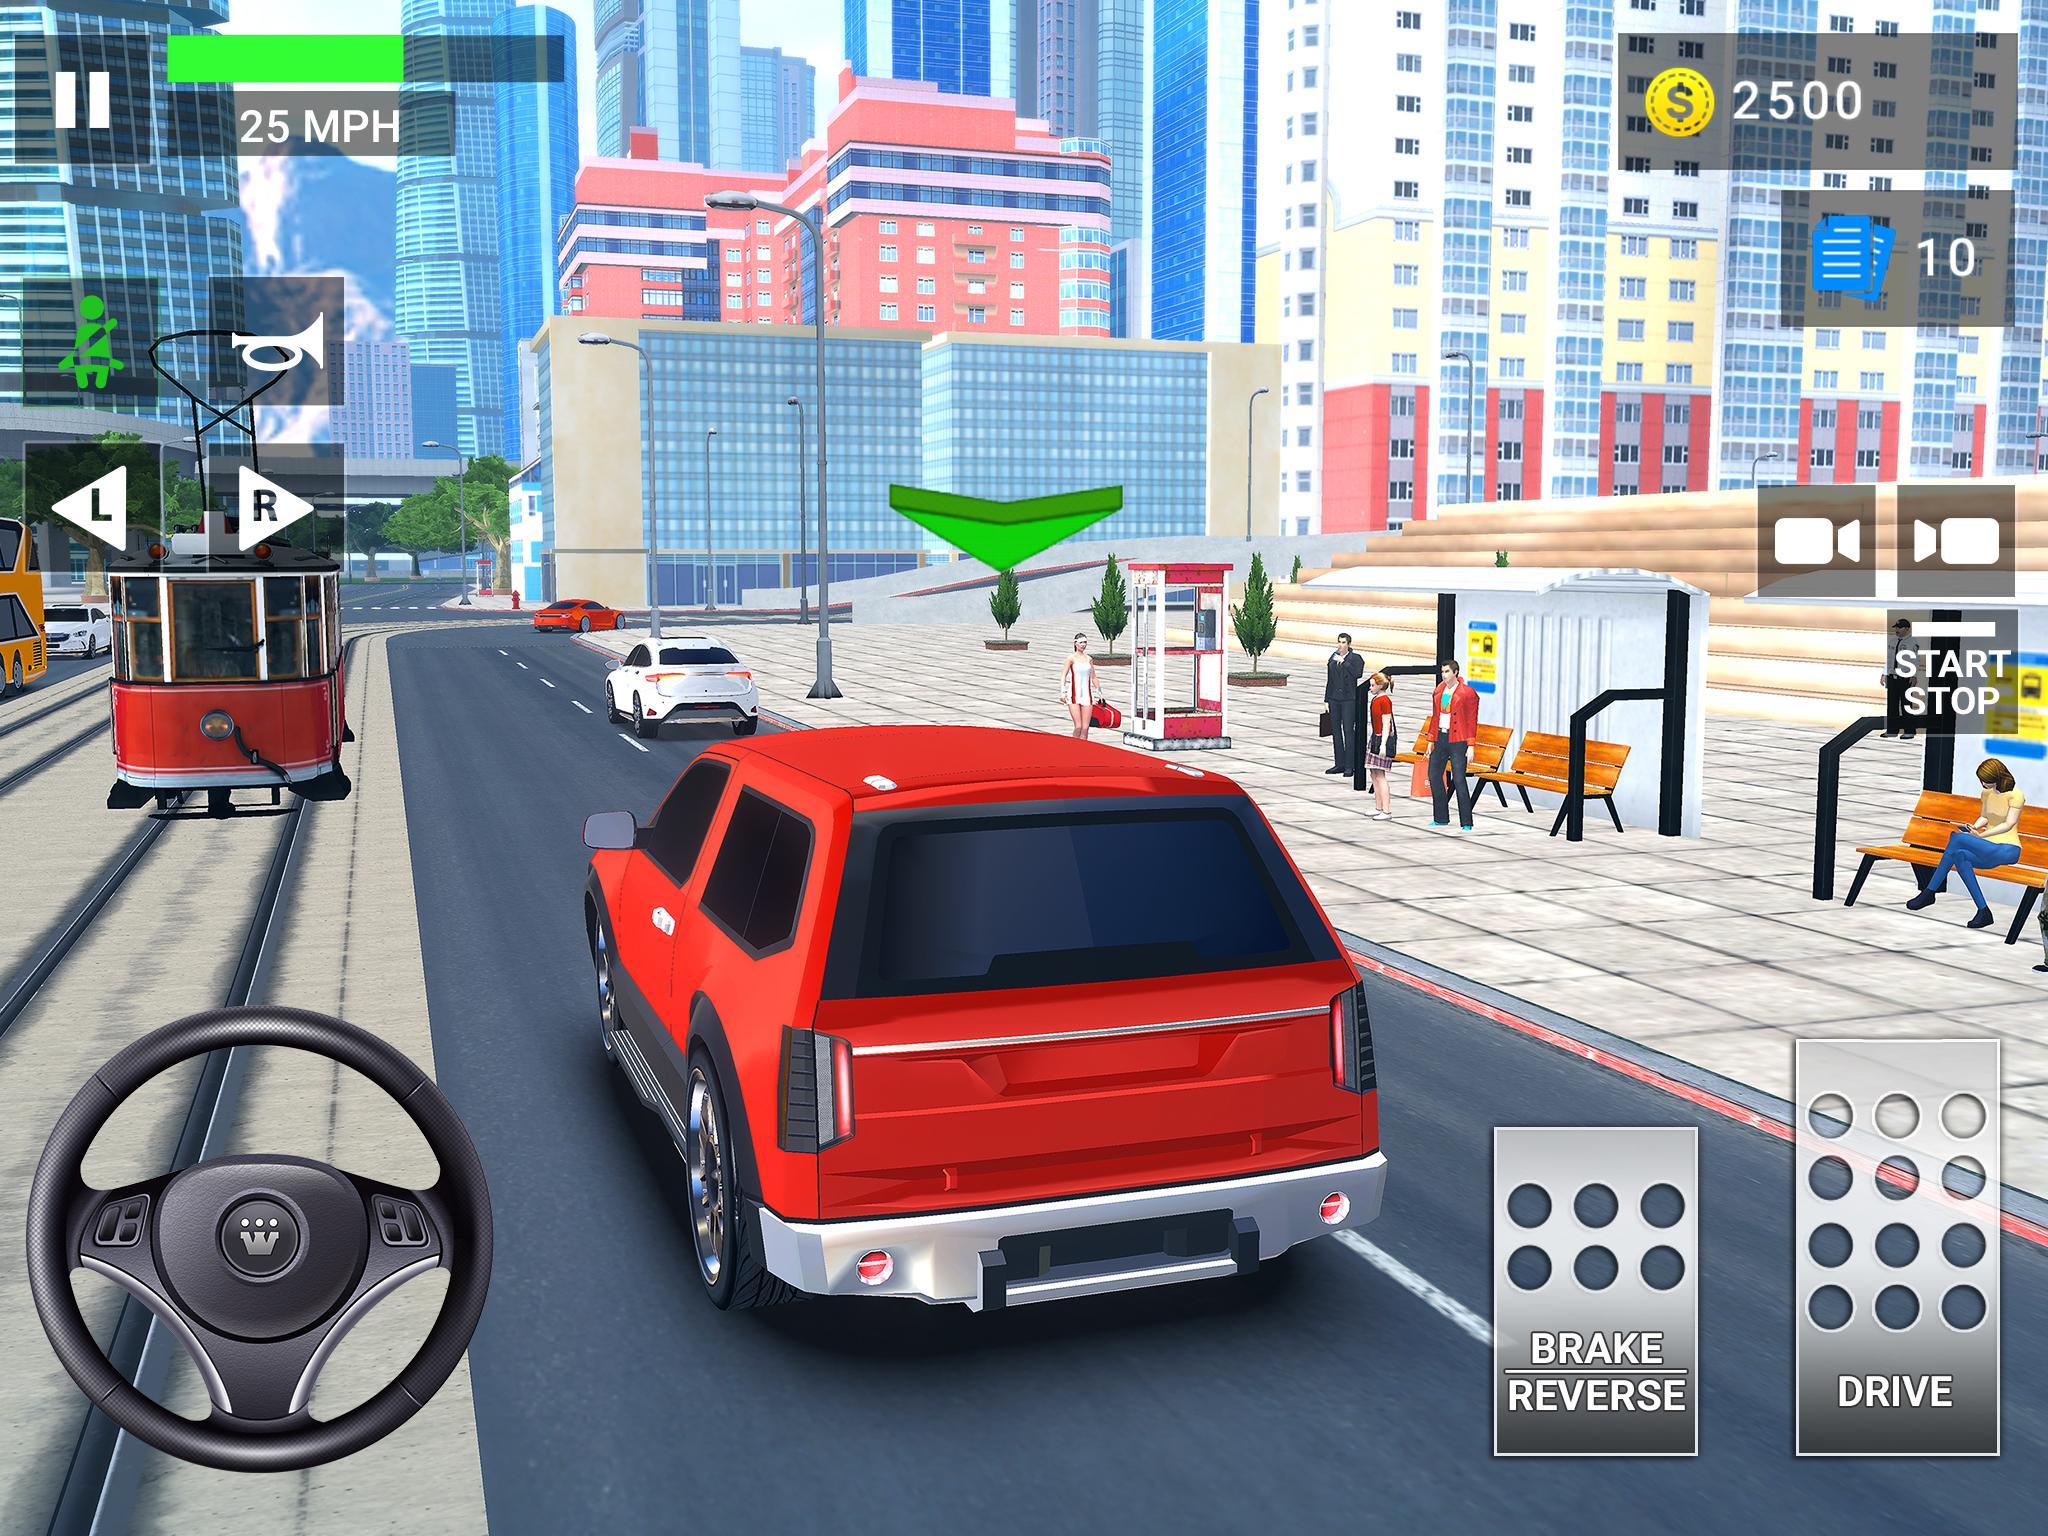 Driving Academy 2 Car Games & Driving School 2021 2.1 Screenshot 10